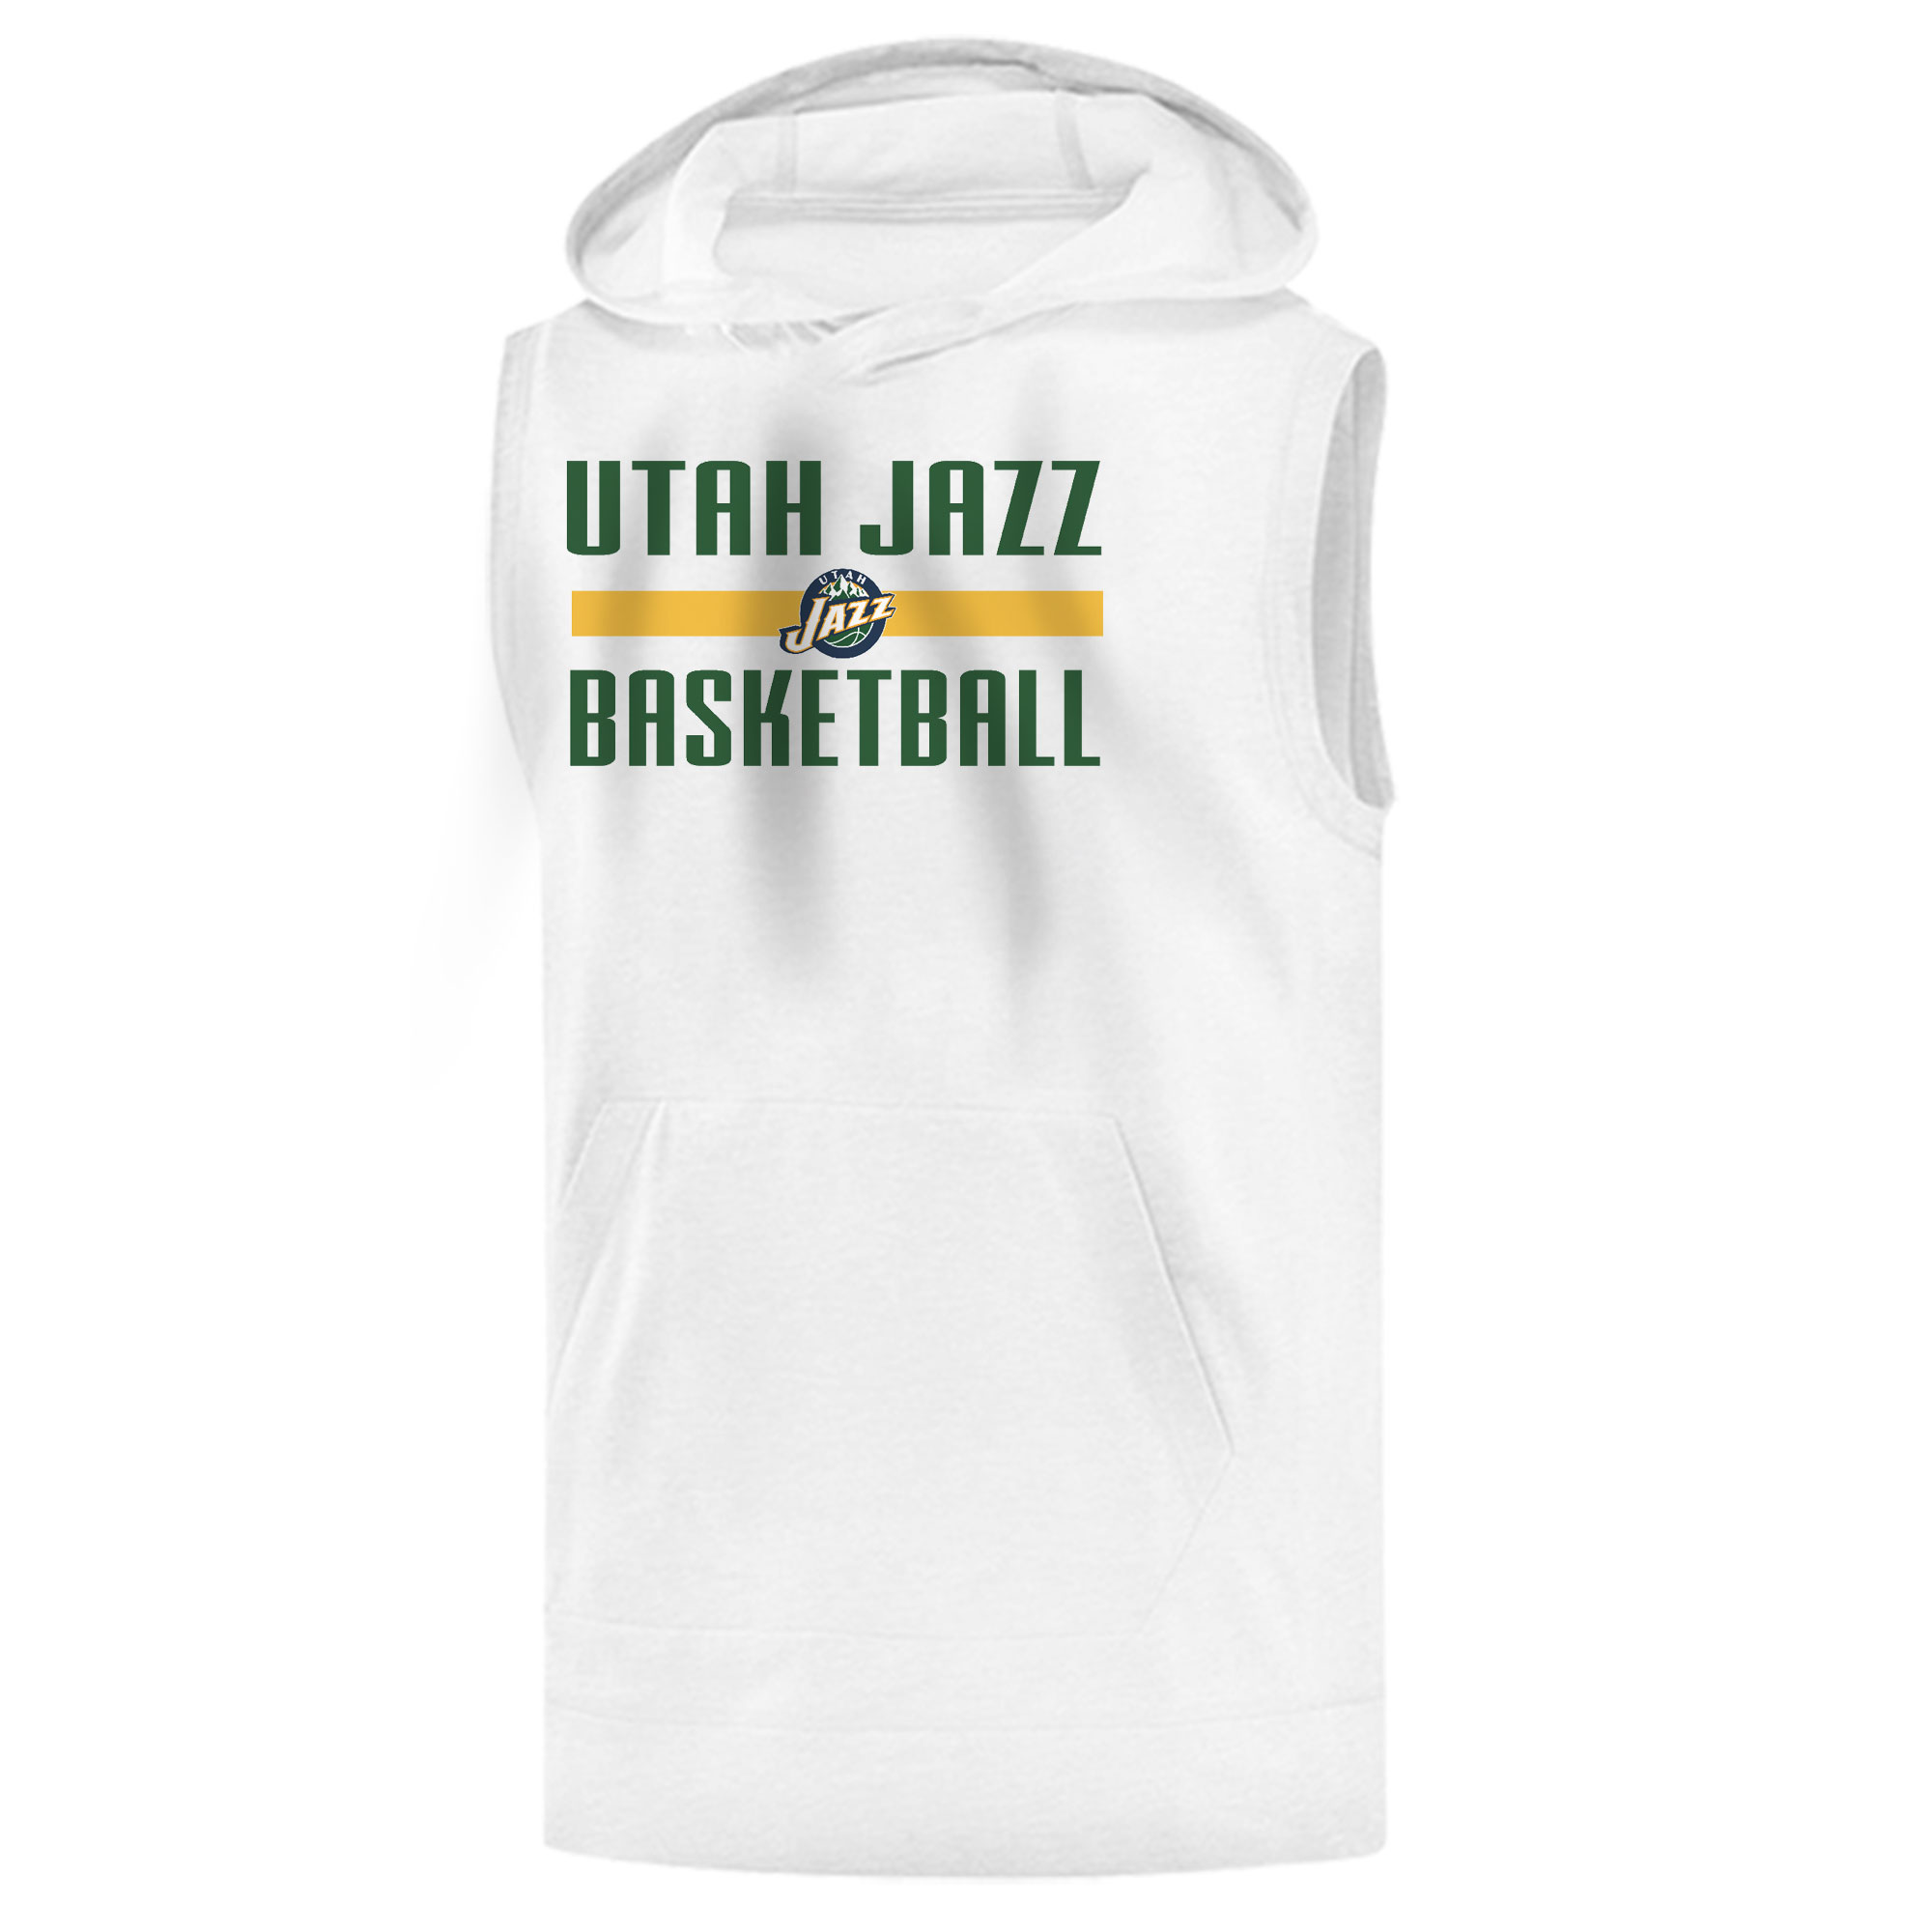 Utah Jazz Basketball Sleeveless (KLS-WHT-917)